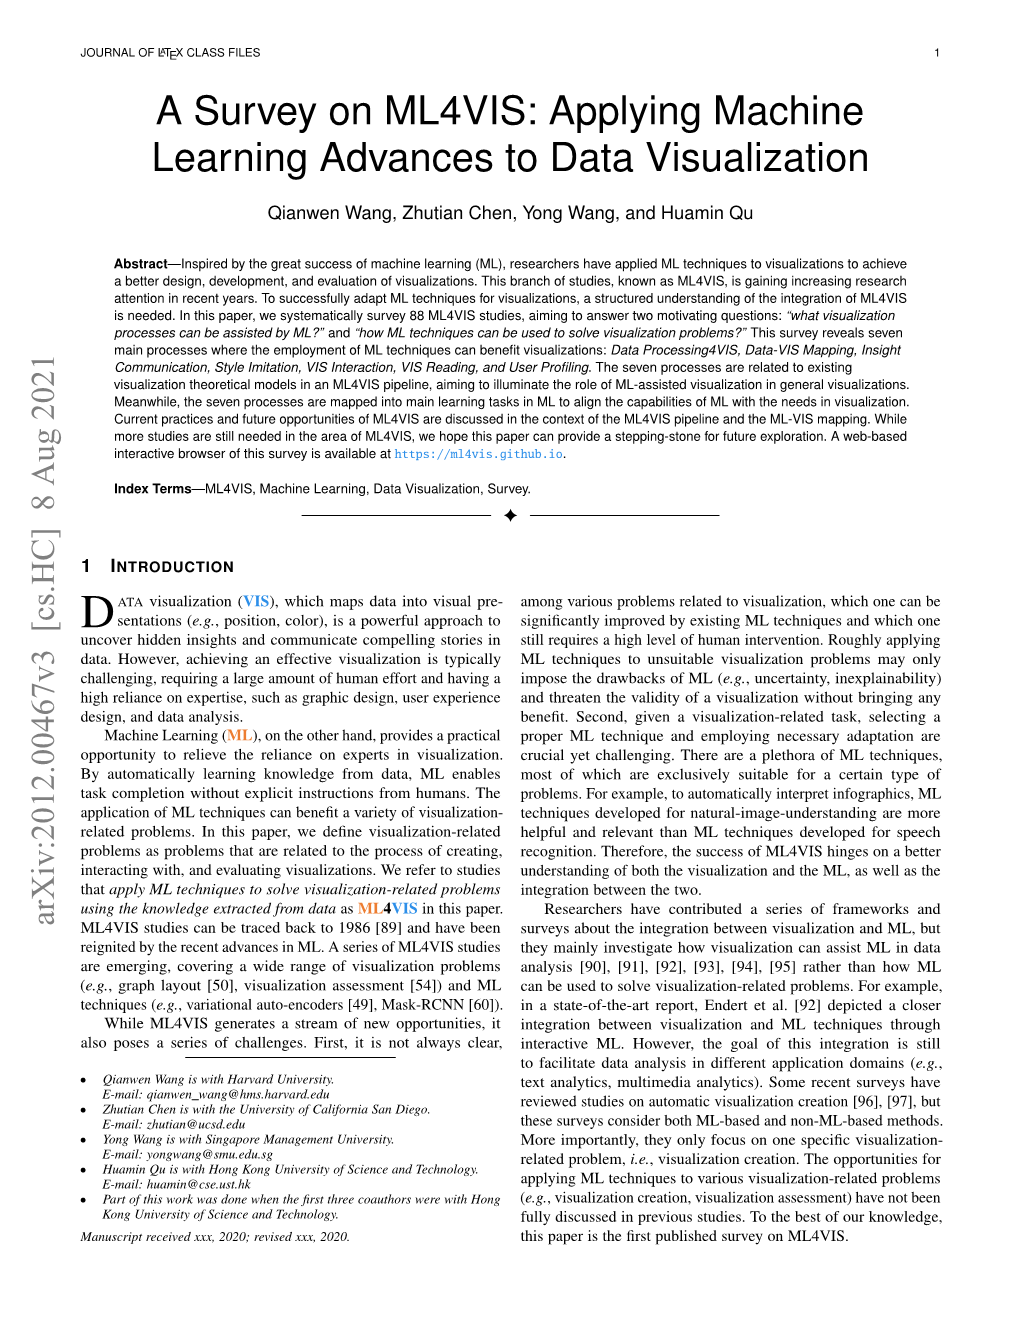 Applying Machine Learning Advances to Data Visualization